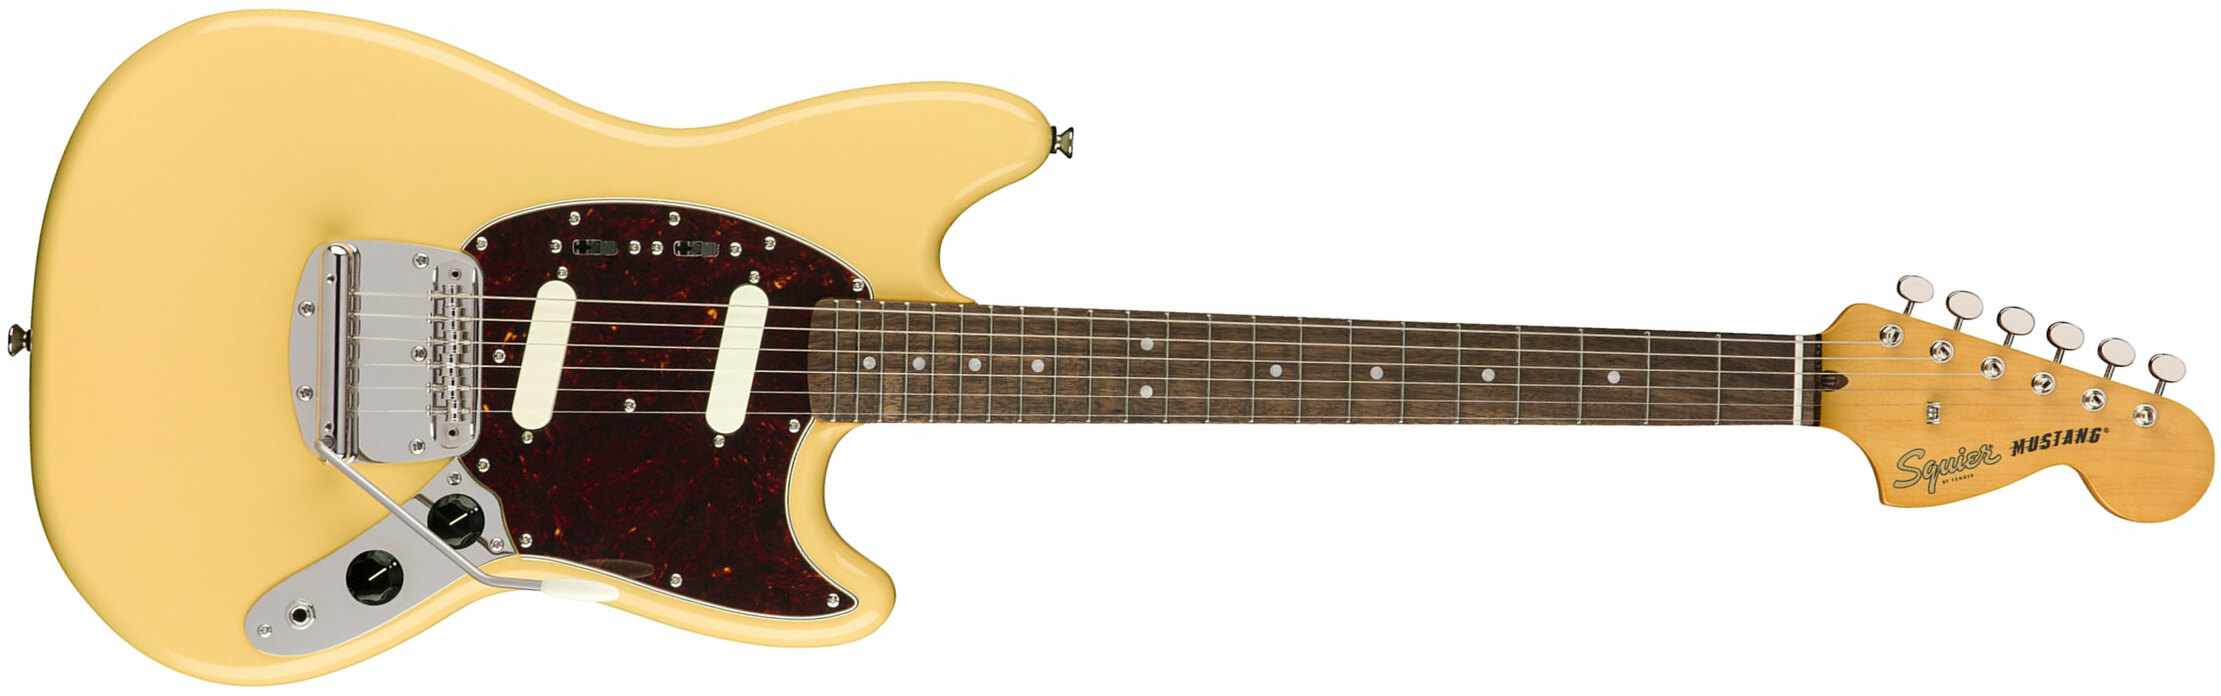 Squier Mustang  Classic Vibe 60s 2019 Lau - Vintage White - Guitarra electrica retro rock - Main picture